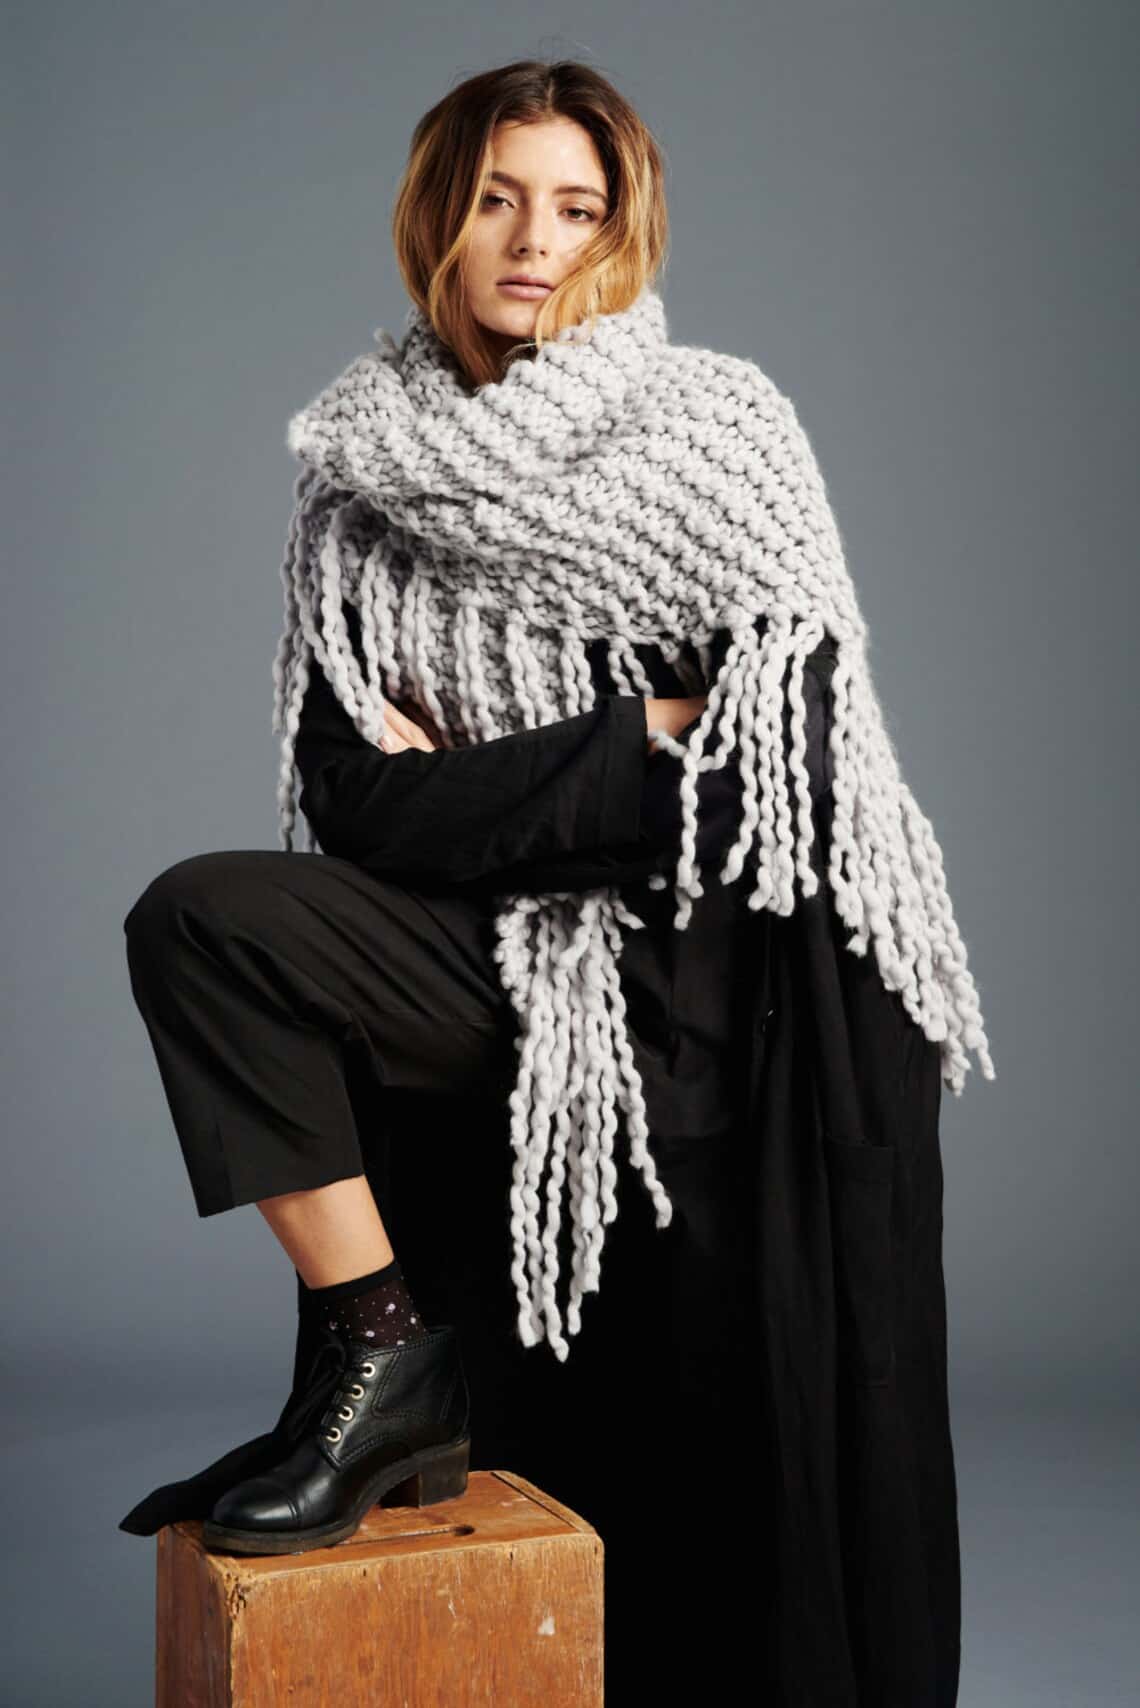 Chunky merino fringe shawl by Loopy Mango (Etsy)
